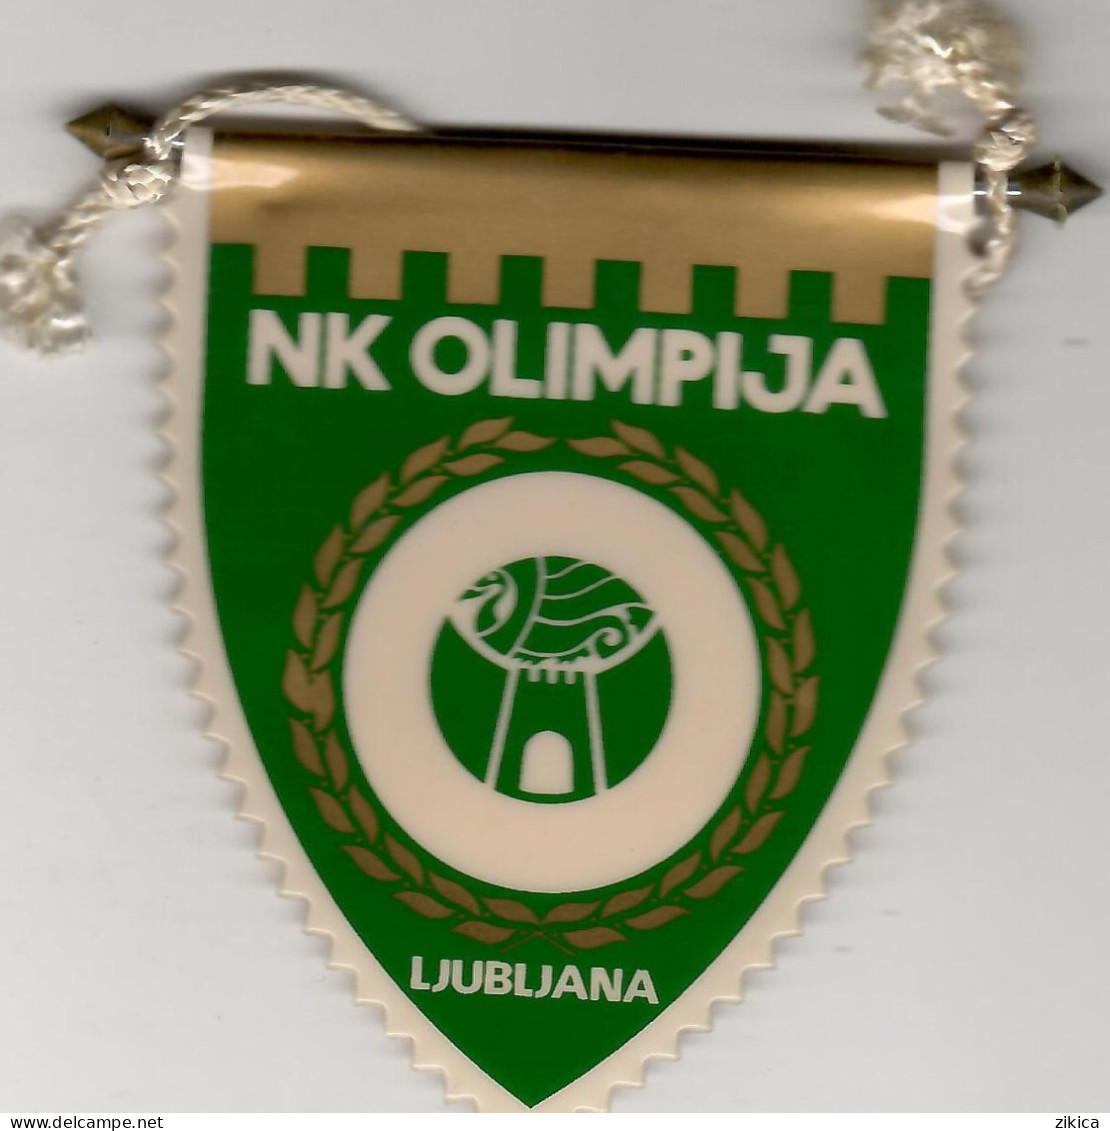 Soccer / Football Club - NK Olimpija - Ljubljana - Slovenia - Kleding, Souvenirs & Andere